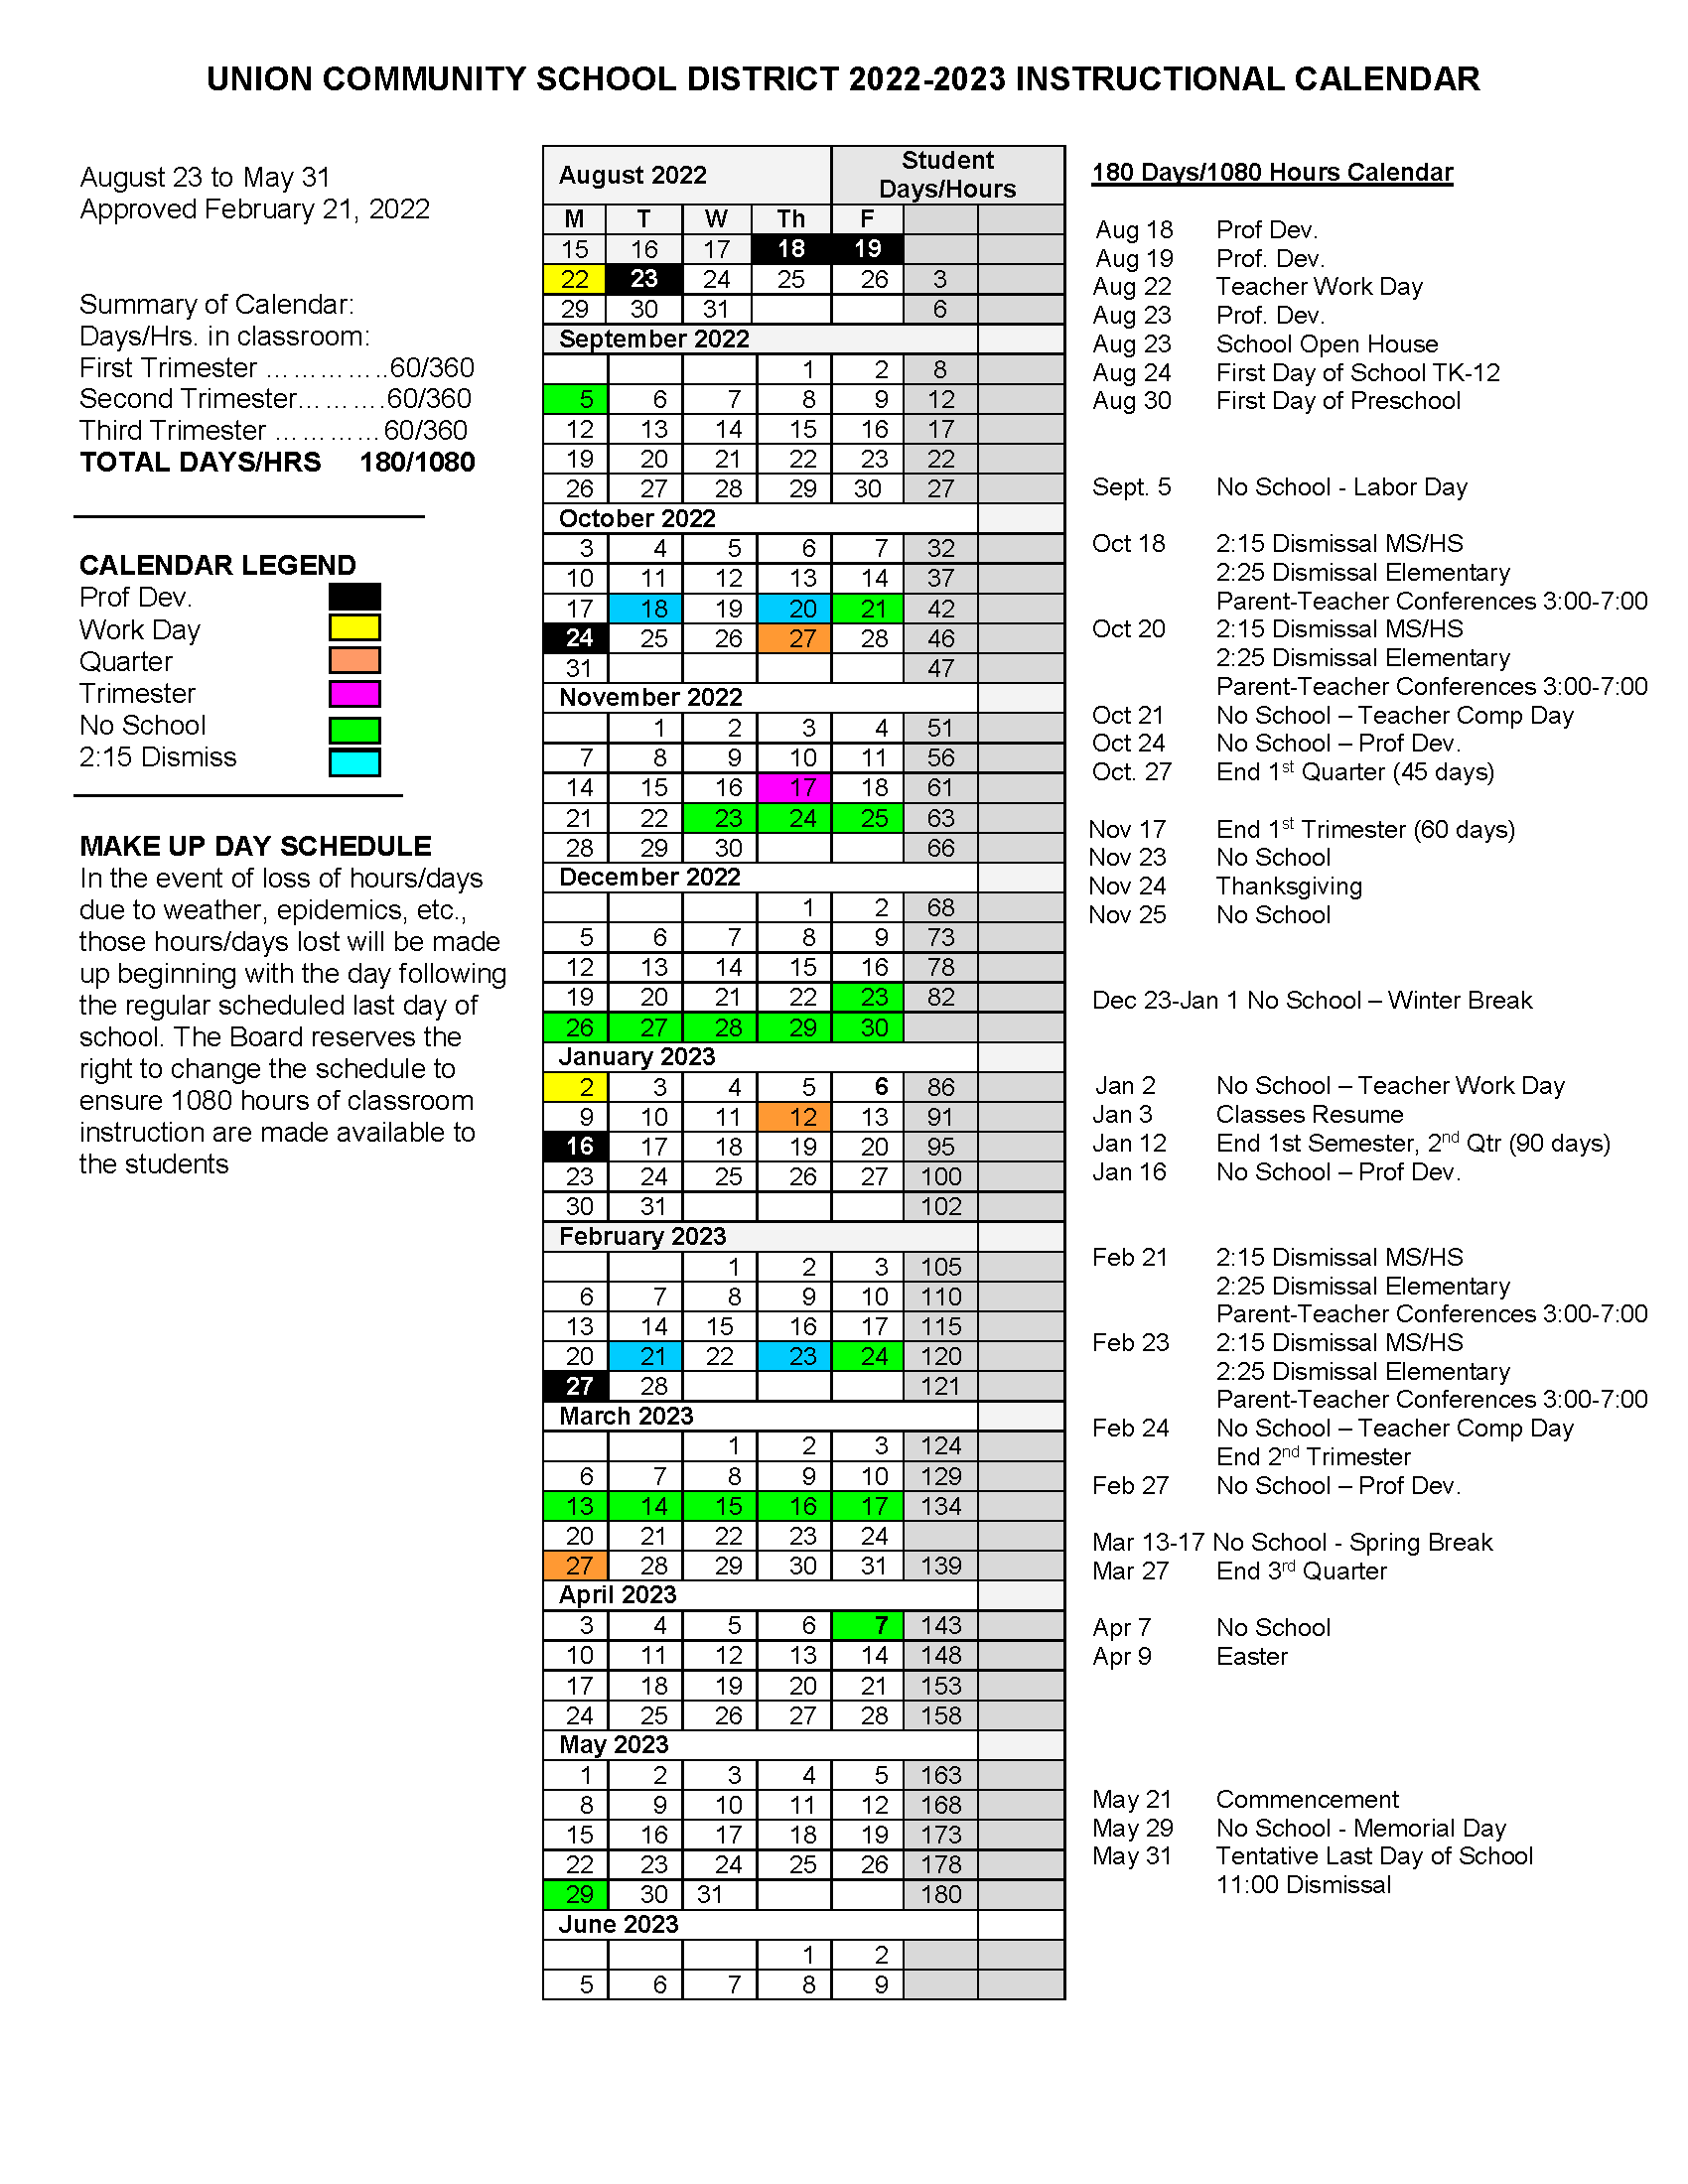 2022-2023 Instructional Calendar